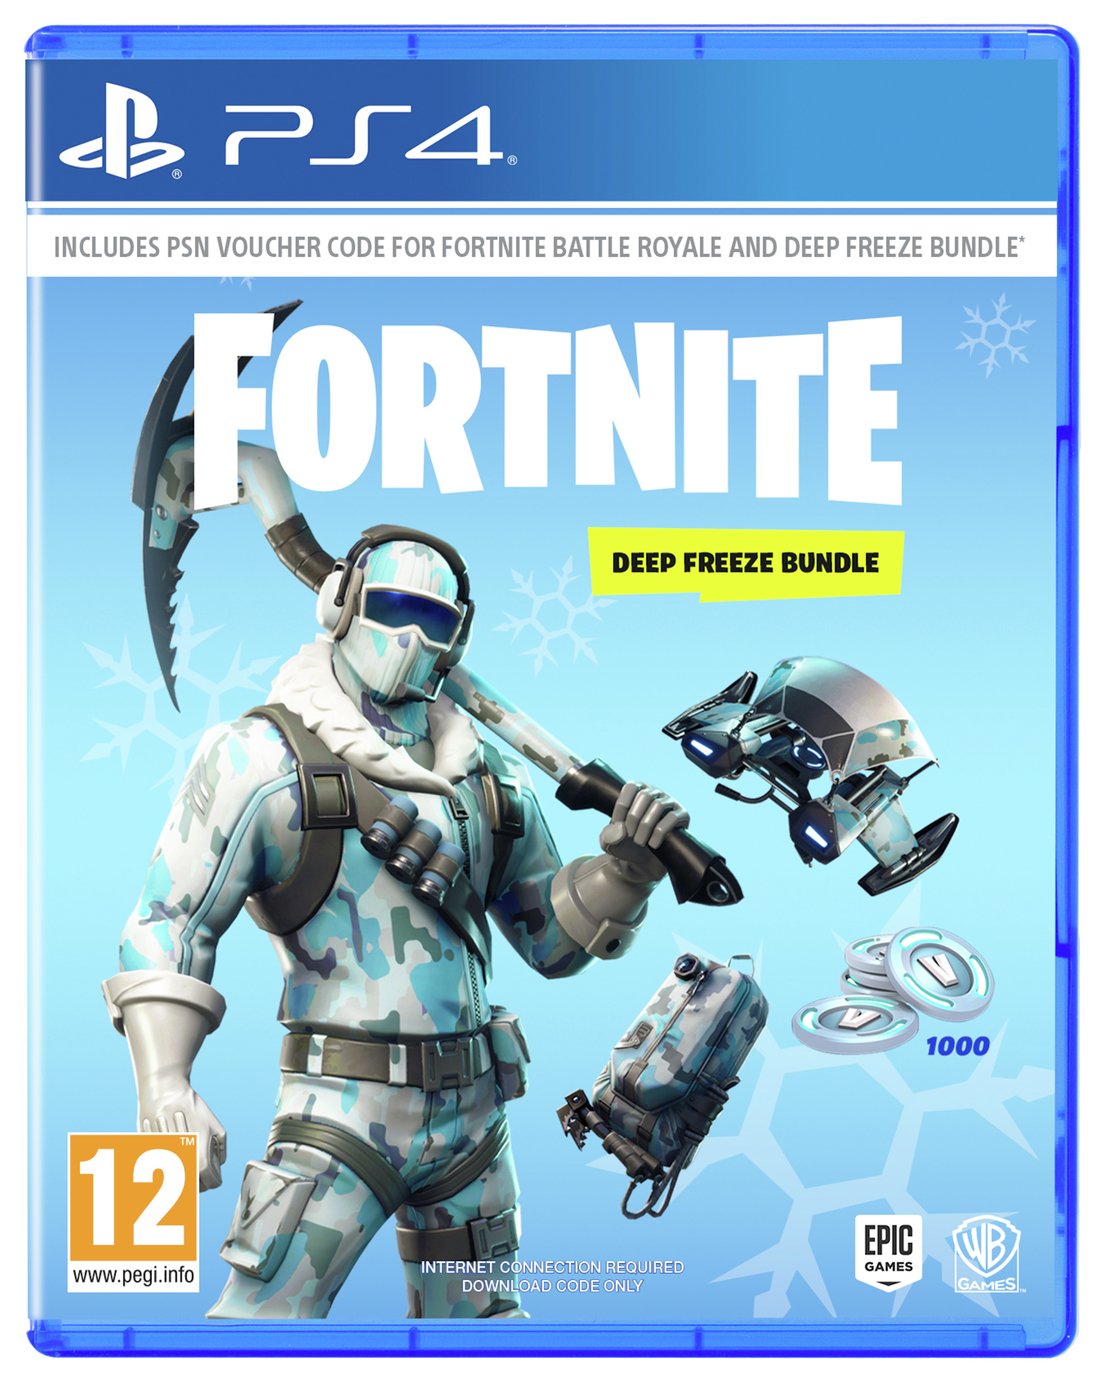 Fortnite Deep Freeze Bundle PS4 review